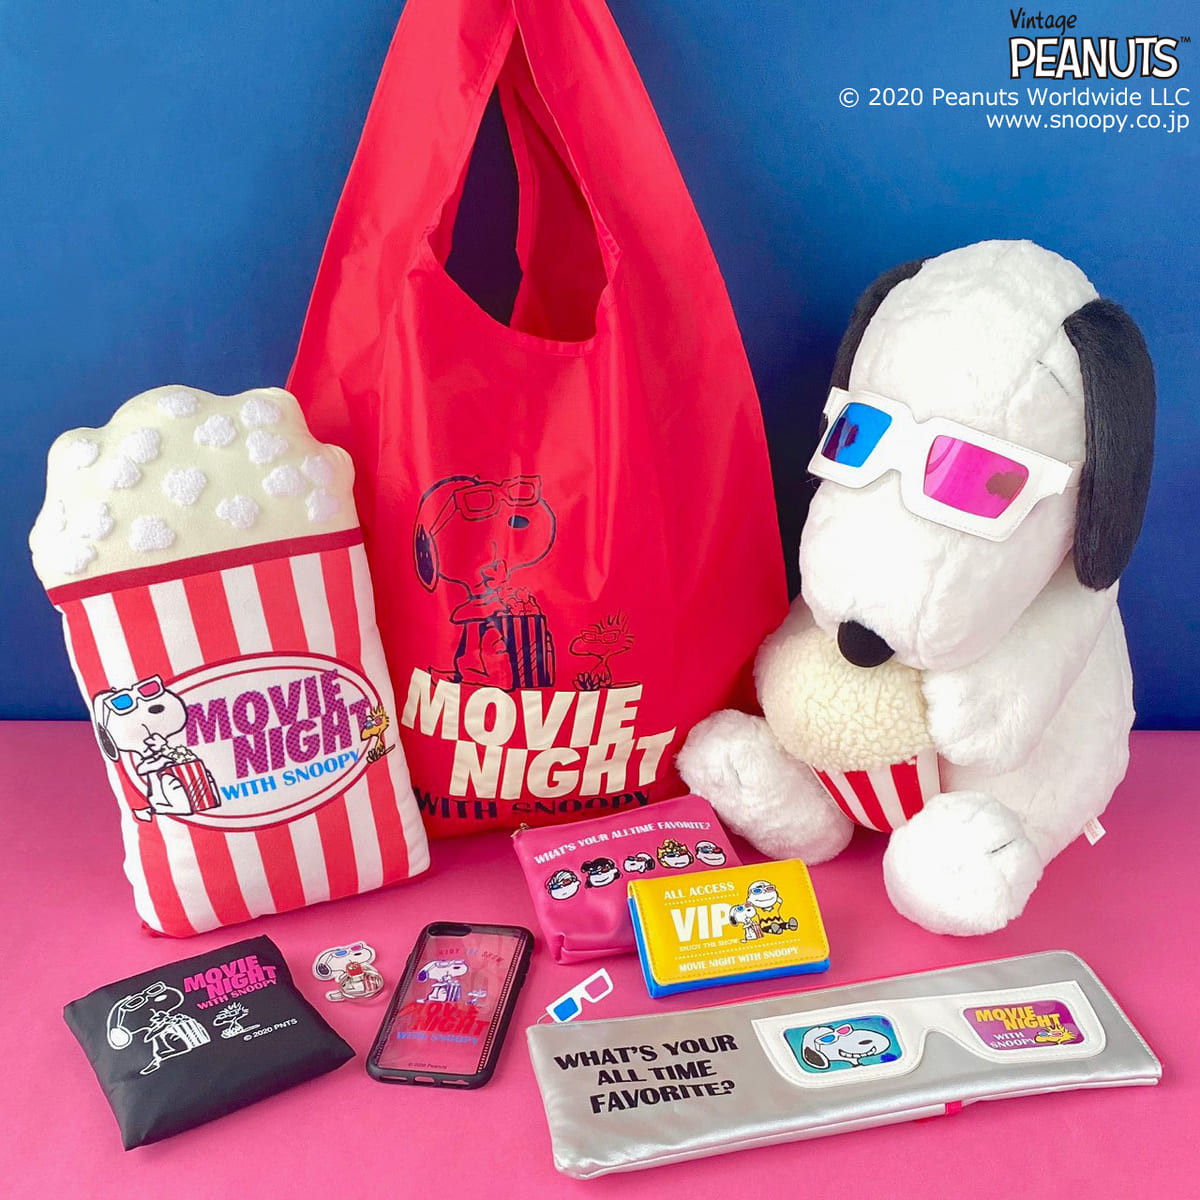 Plaza Movie Night With Snoopy